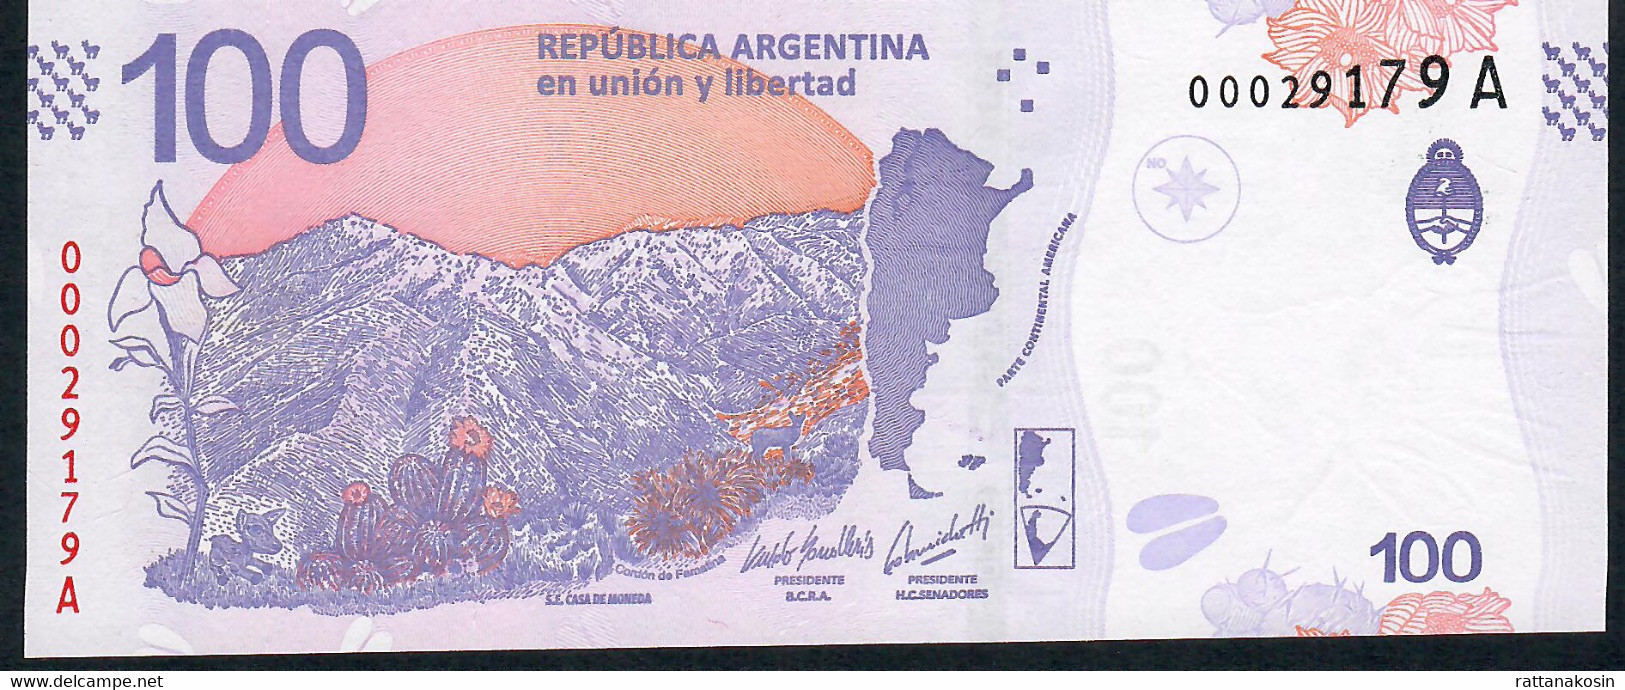 ARGENTINA  LOW # NLP 100 Pesos 2018 Série A Signature 90 Sandleris/Michetti # 00029179A   UNC. - Argentina